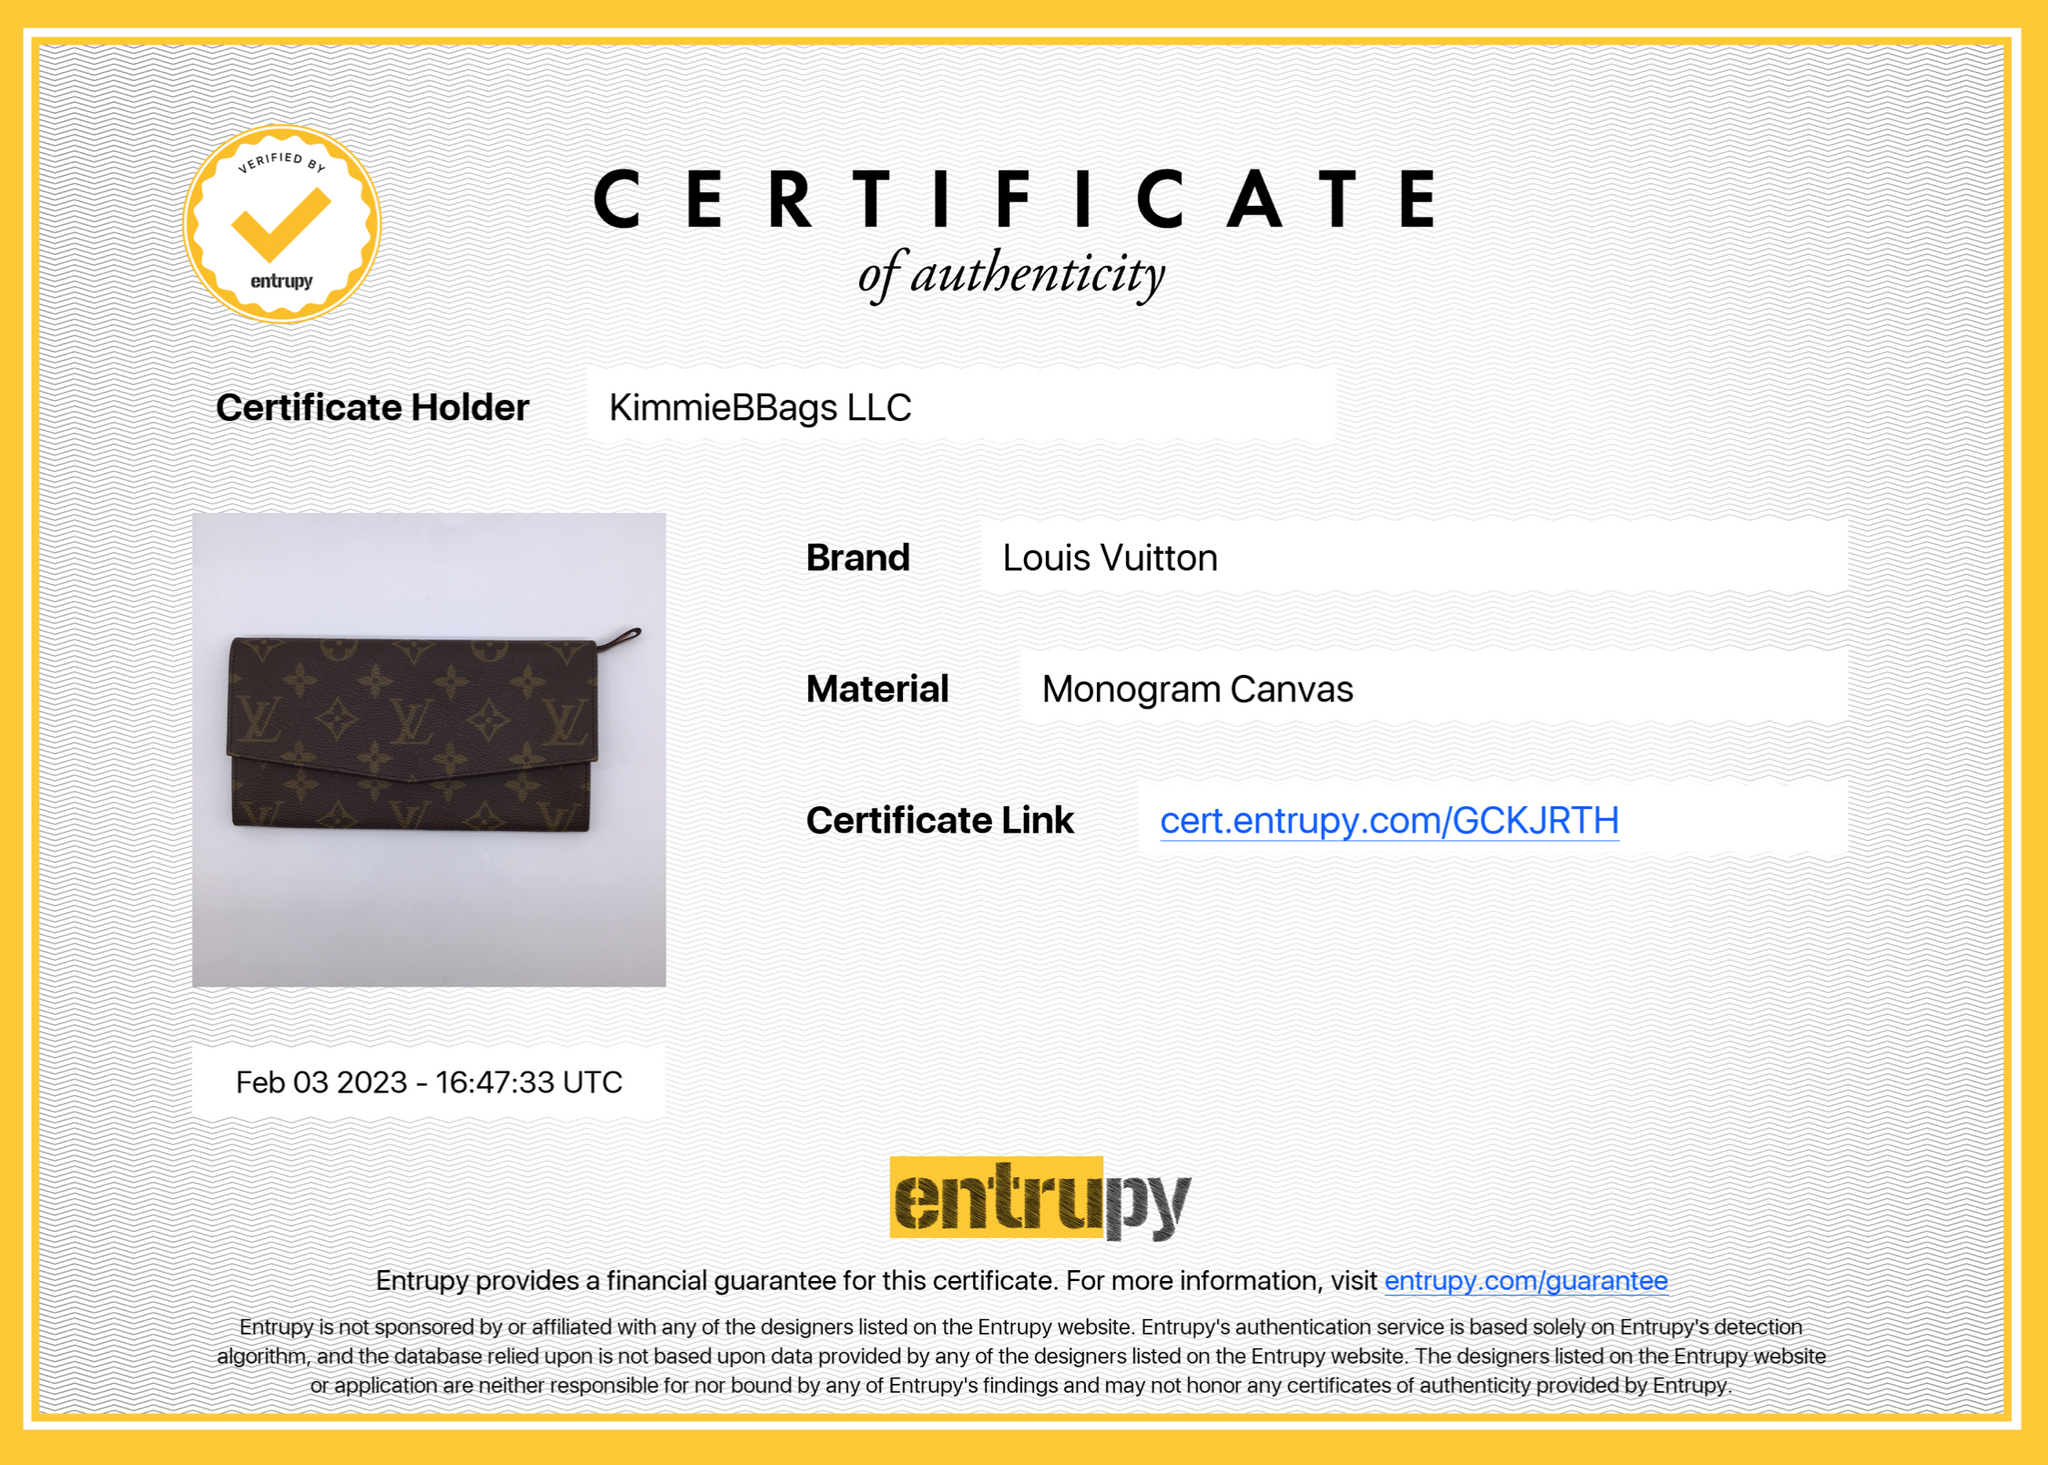 Louis Vuitton Monogram Portefeiulle Sarah Long Bifold Wallet